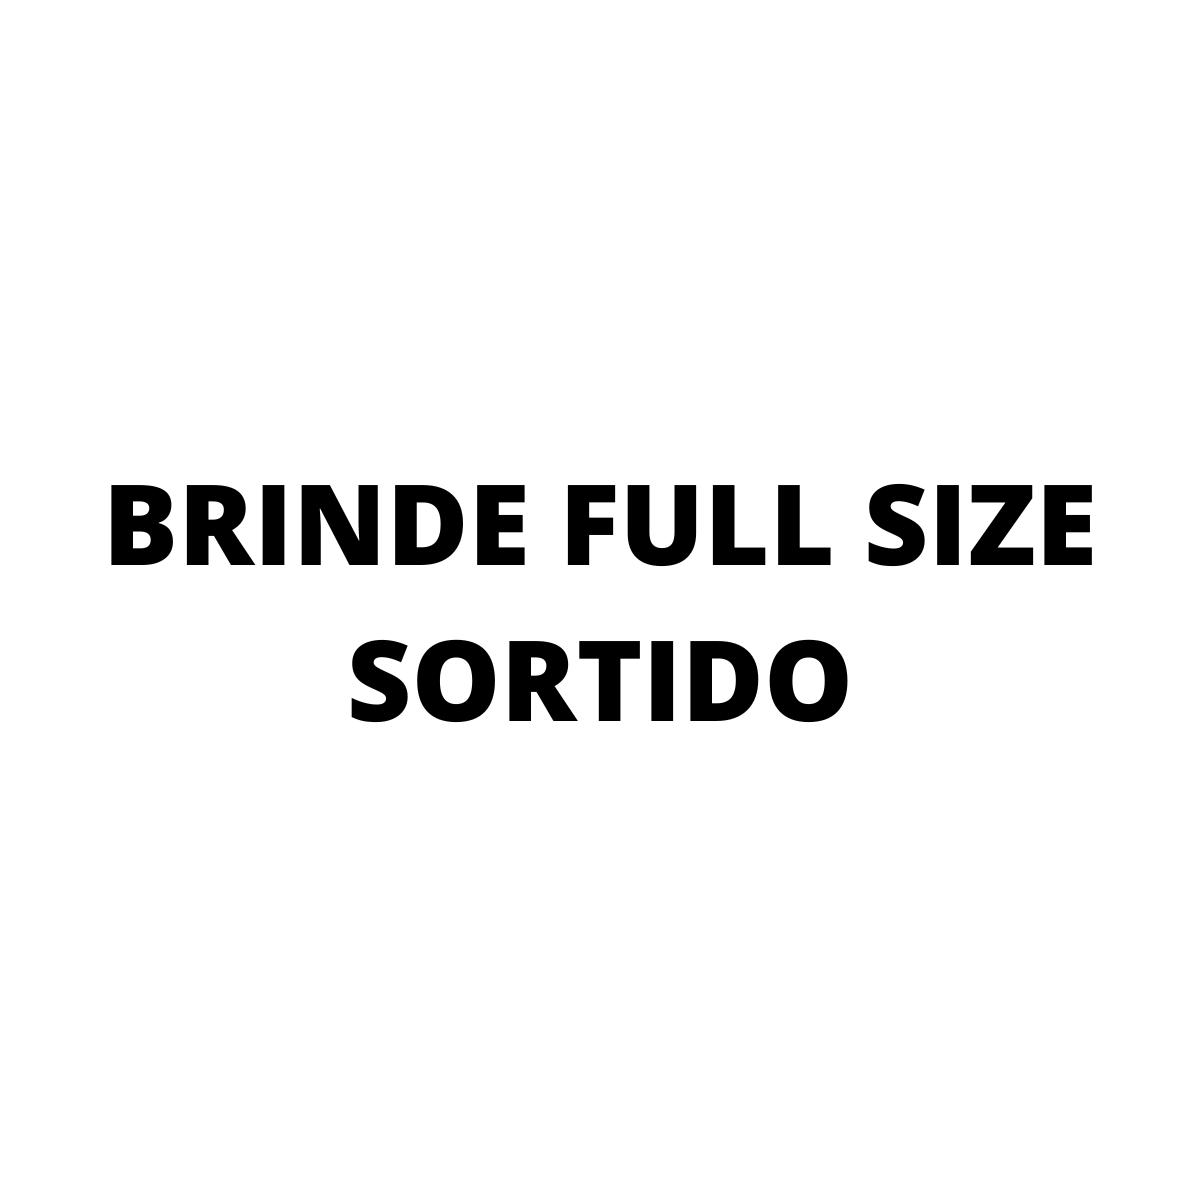 Brinde Full Size Sortido #1